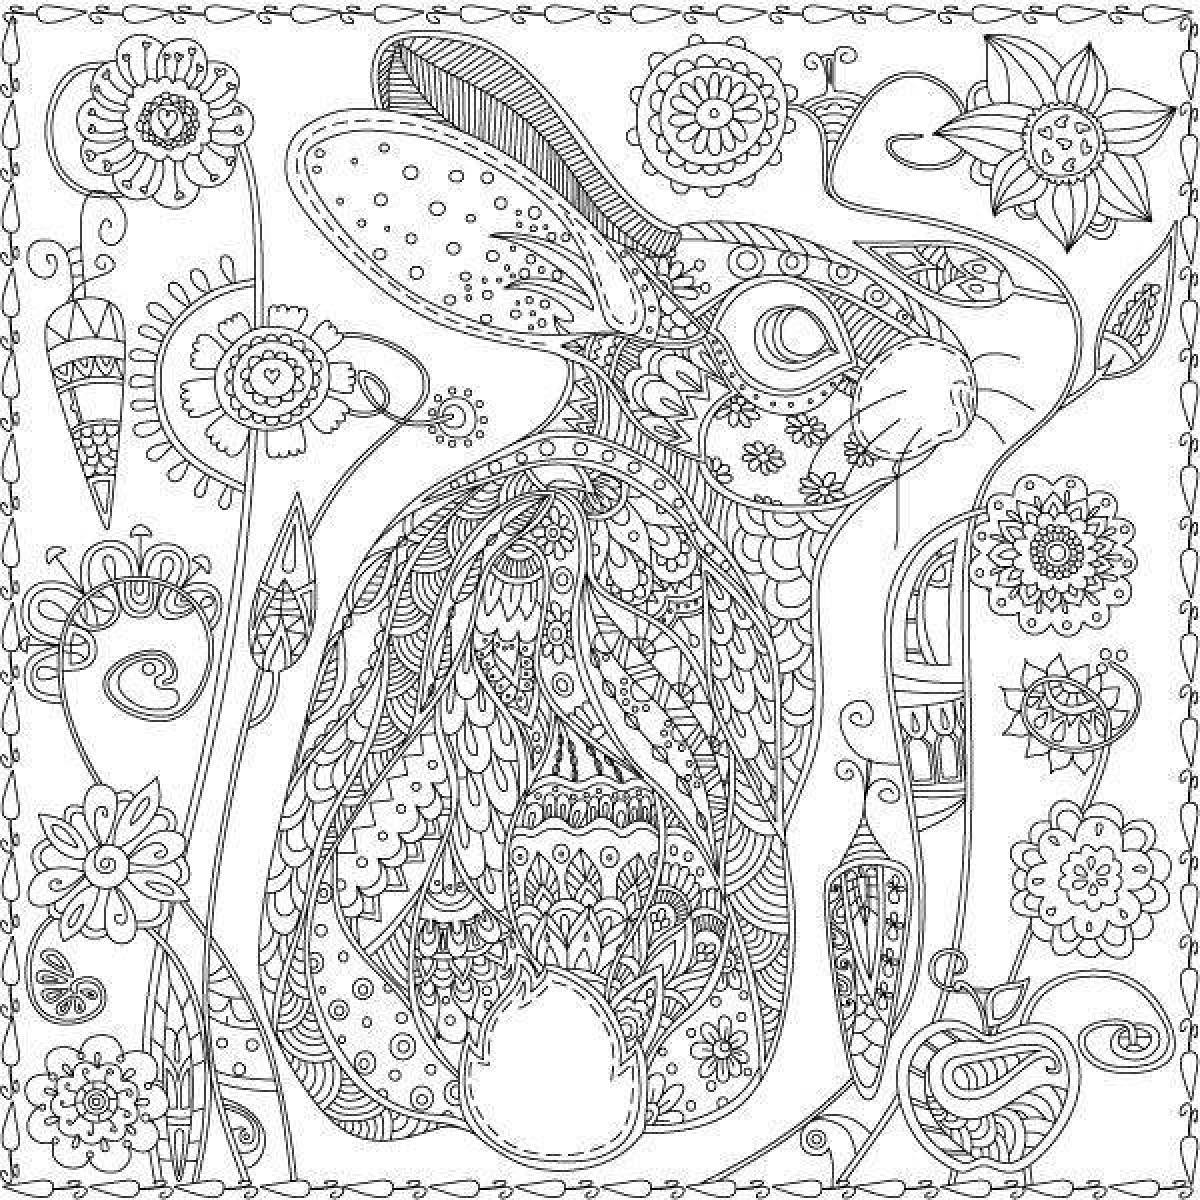 Coloring book peaceful anti-stress rabbit